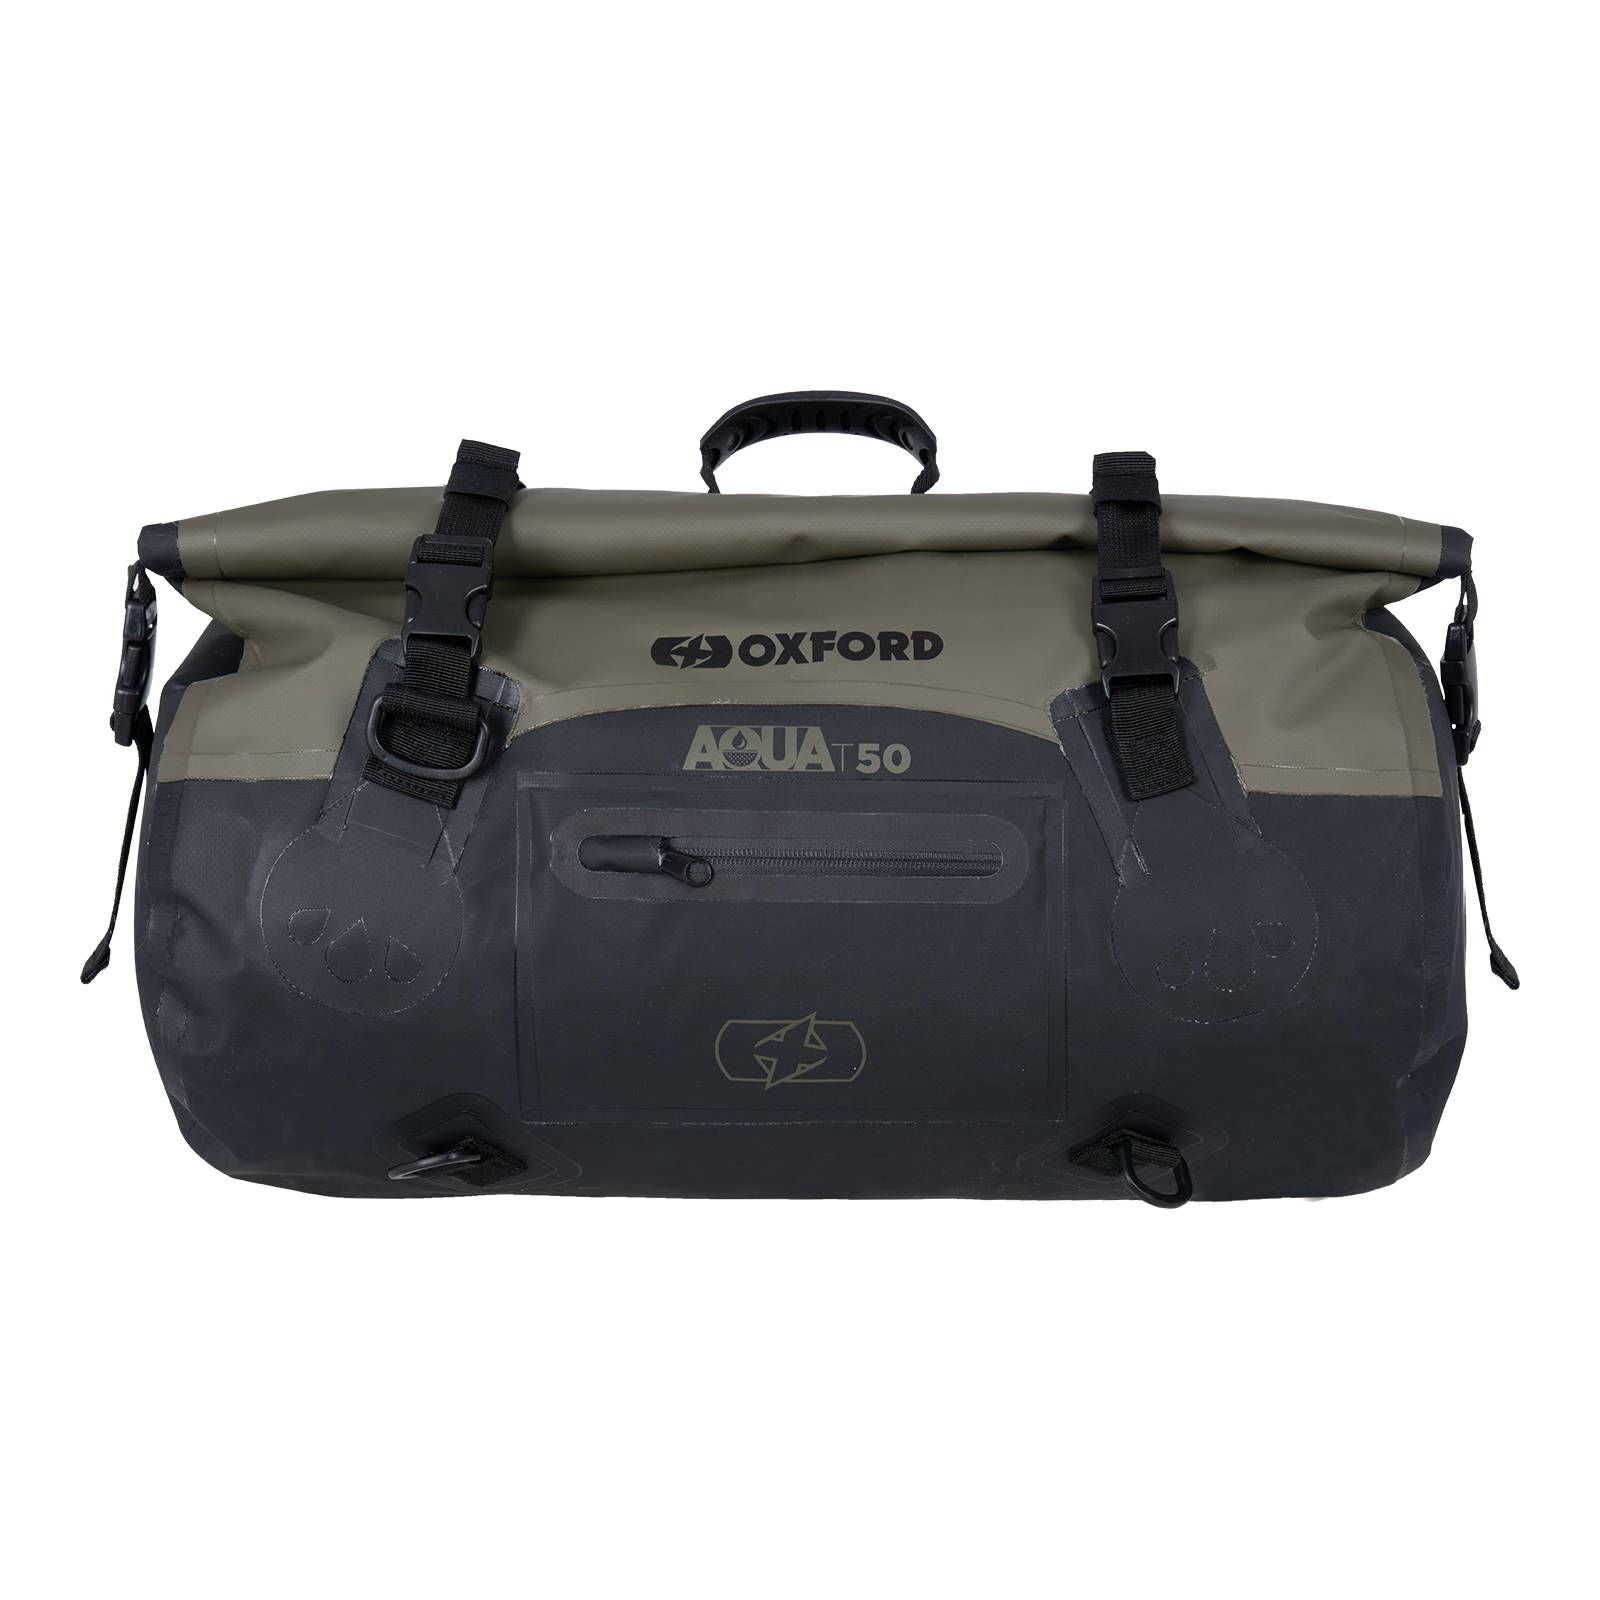 New OXFORD Roll Bag Aqua T50 - Black / Khaki #OXOL402